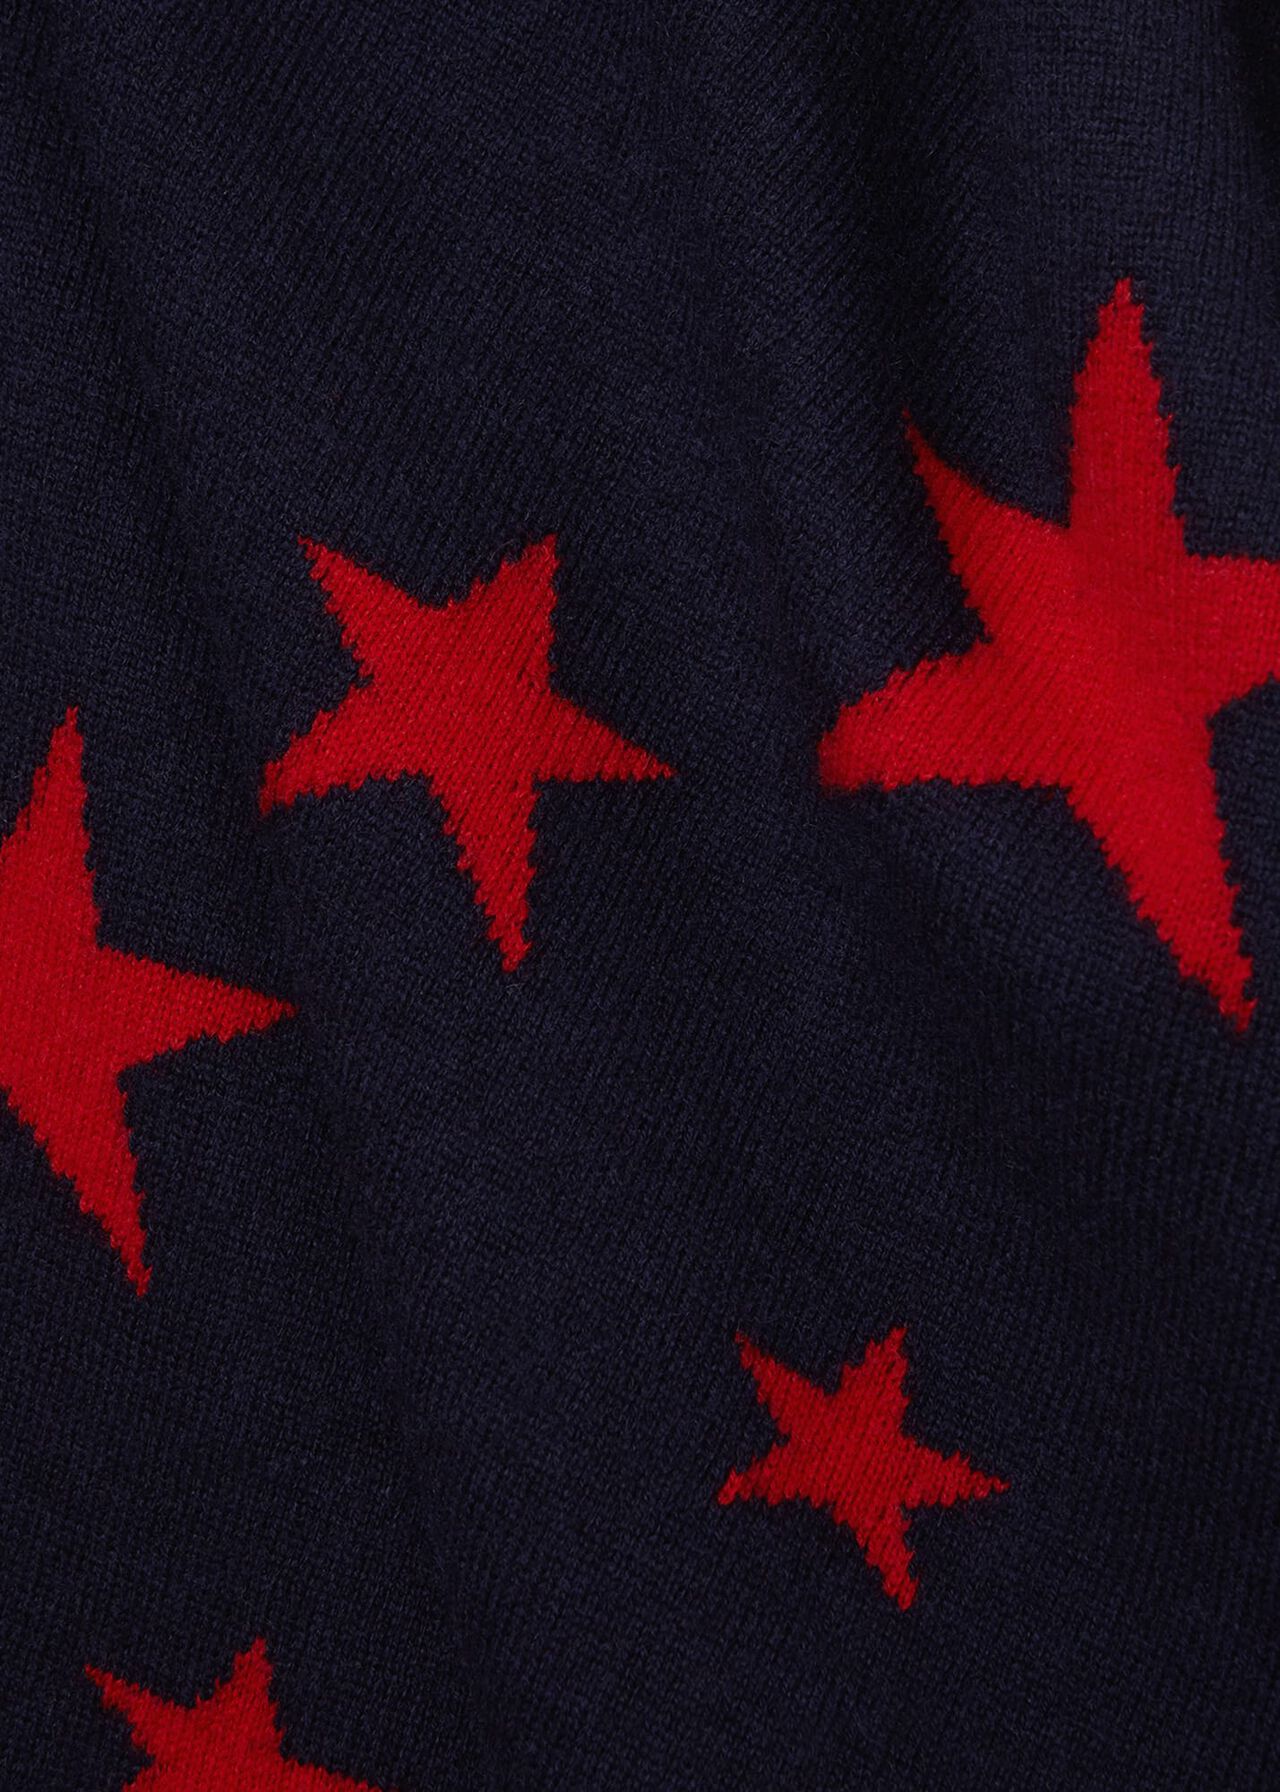 Samira Wool Cashmere Star Sweater, Red Navy, hi-res